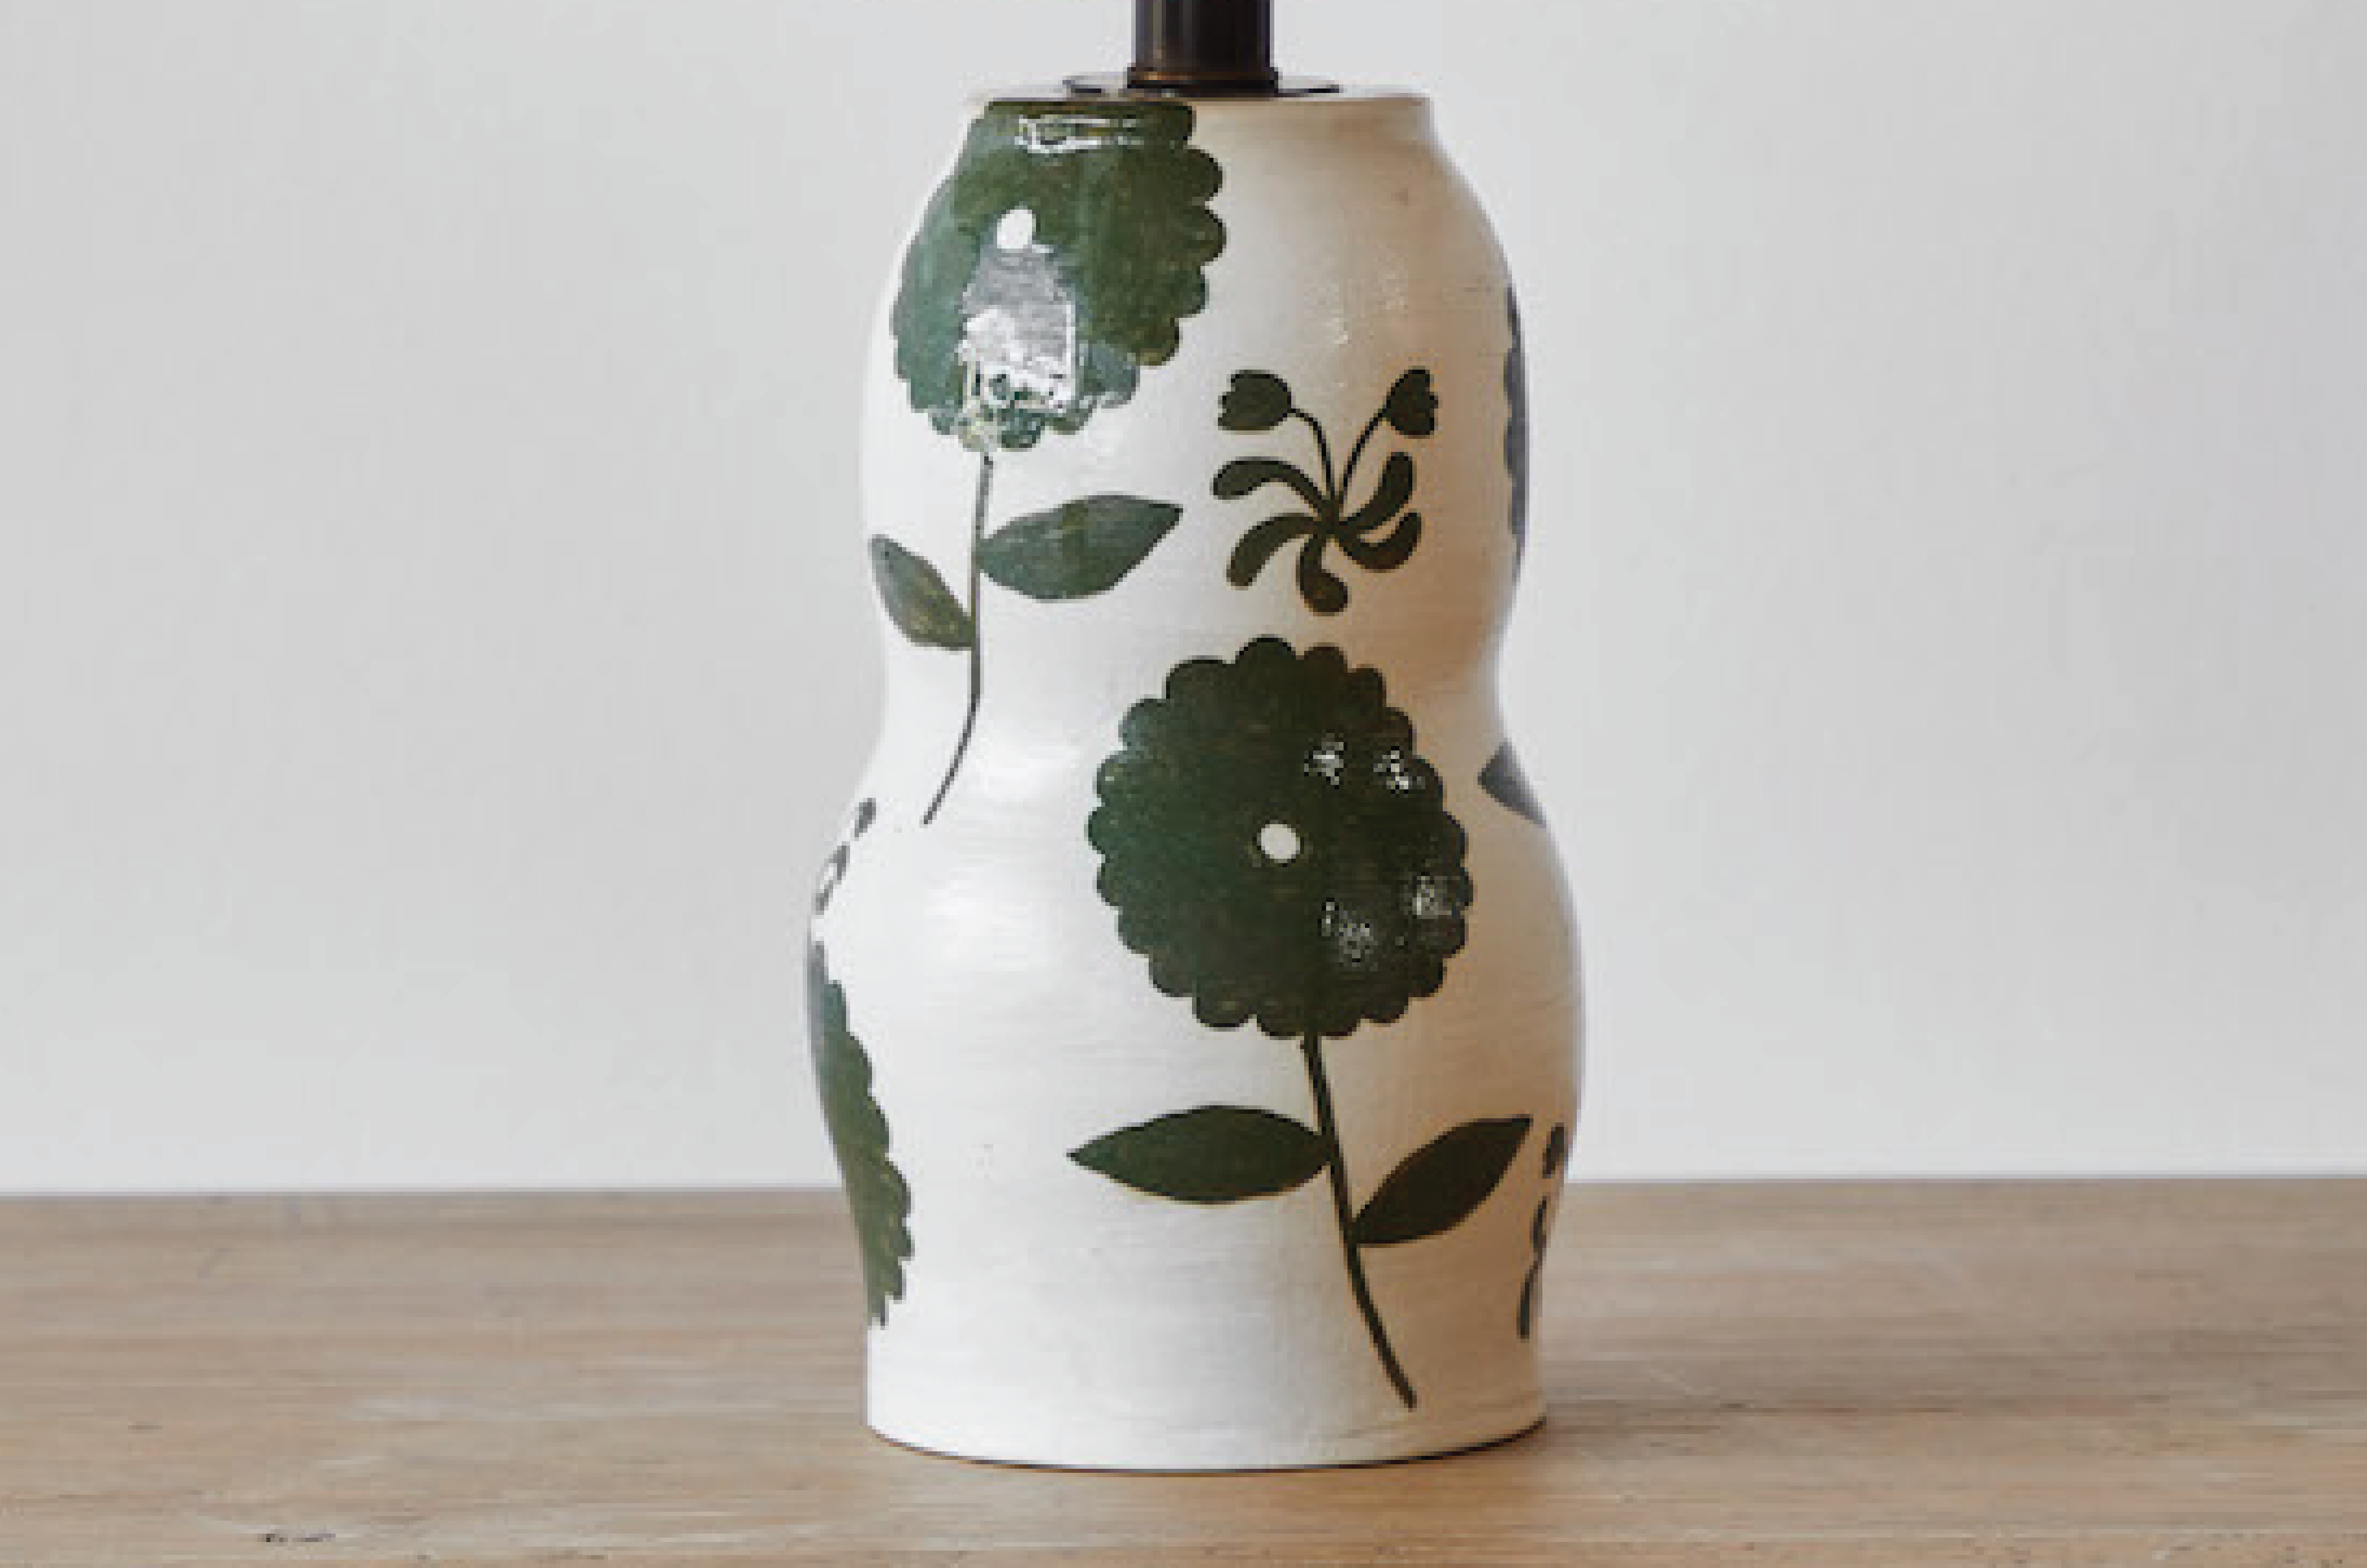 Rebekah Miles, Green Floral Table Lamp